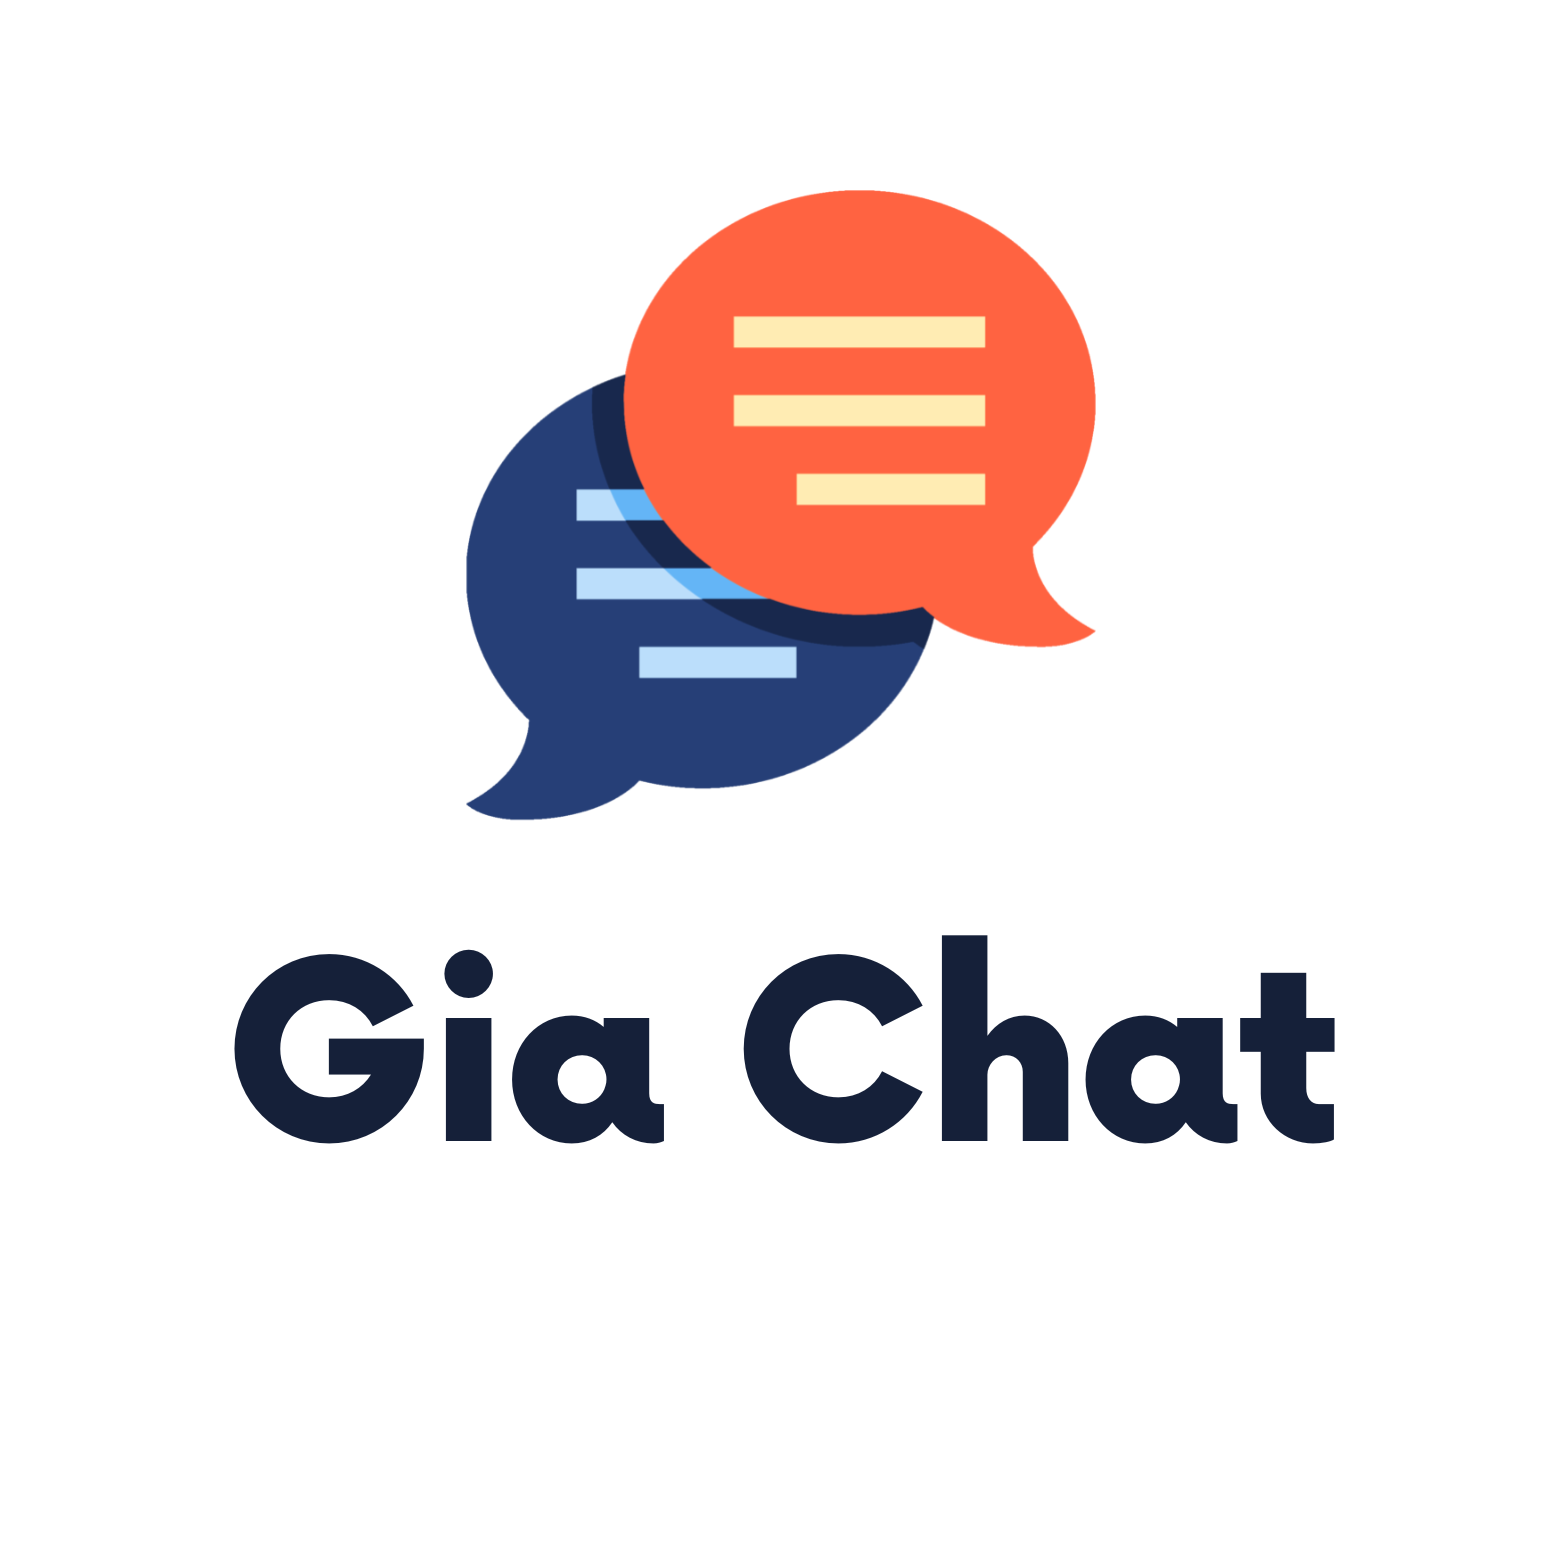 Gia Chat Logo